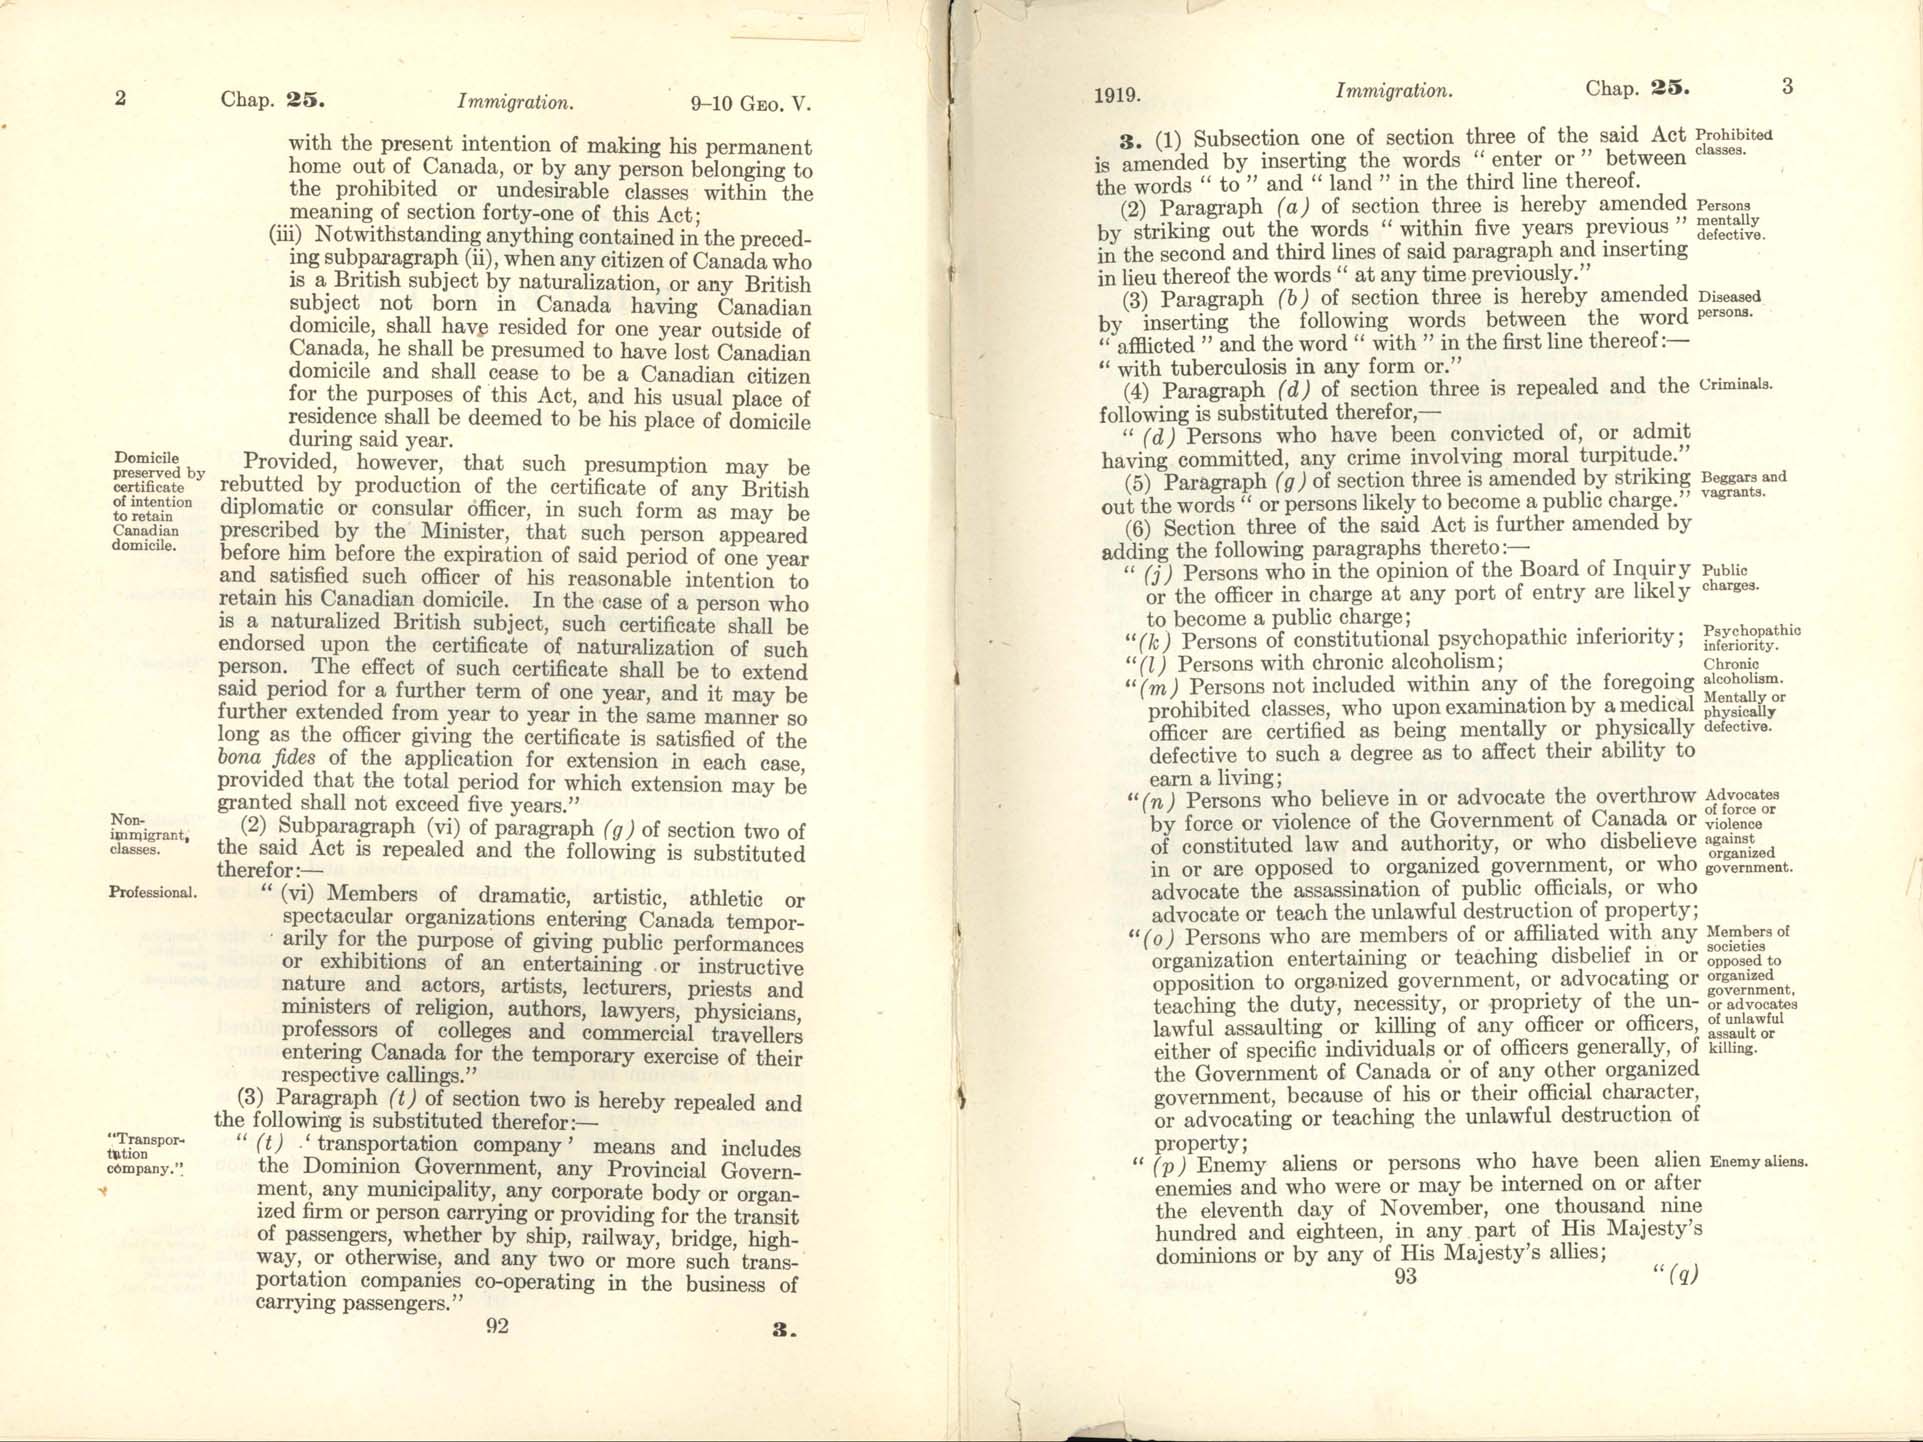 Page 92, 93 Immigration Act Amendment, 1919